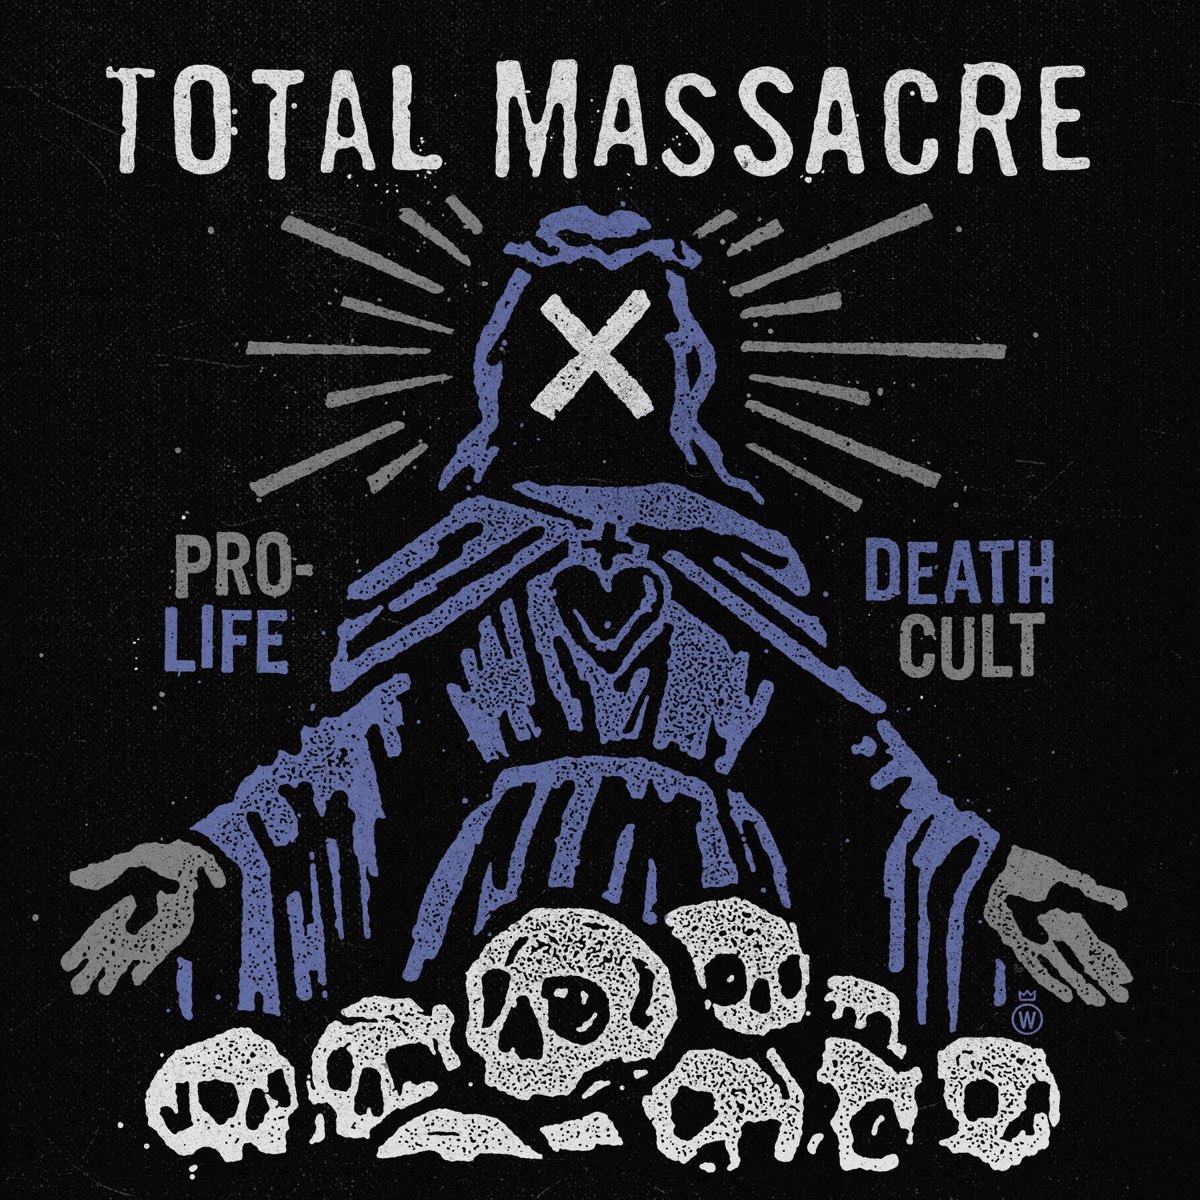 Total carnage. Dead Cult. Life is Death. Death and Life наклейка на одежду.